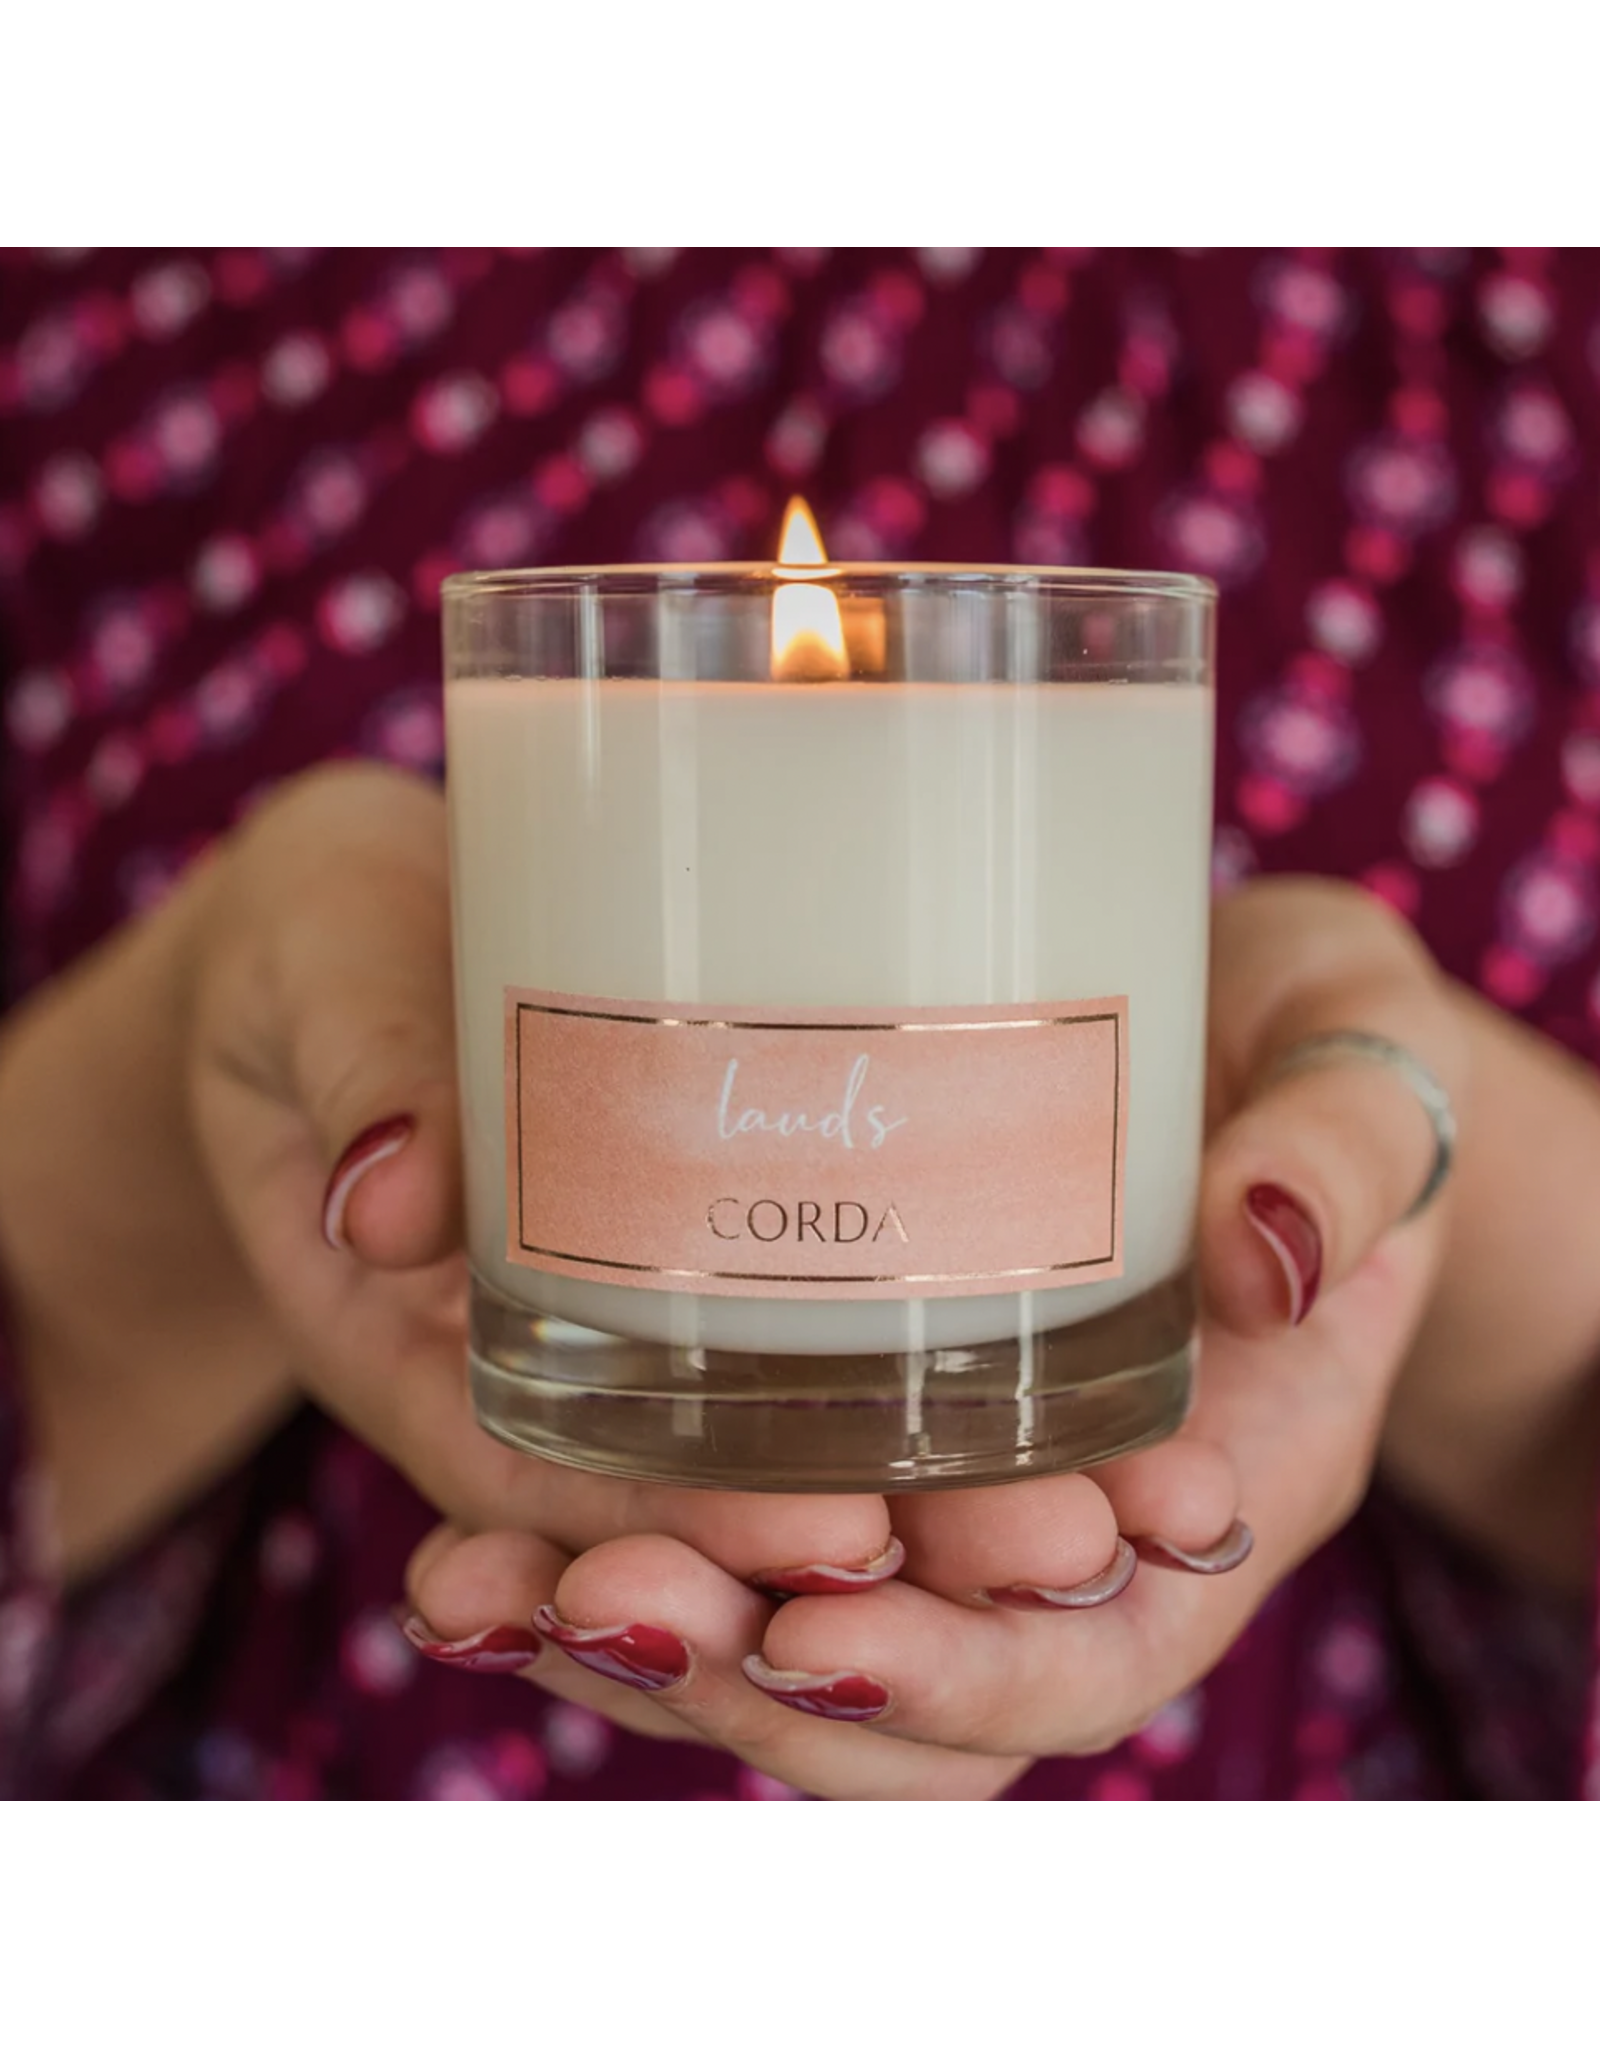 Corda Corda Candle - Lauds - Morning Prayer